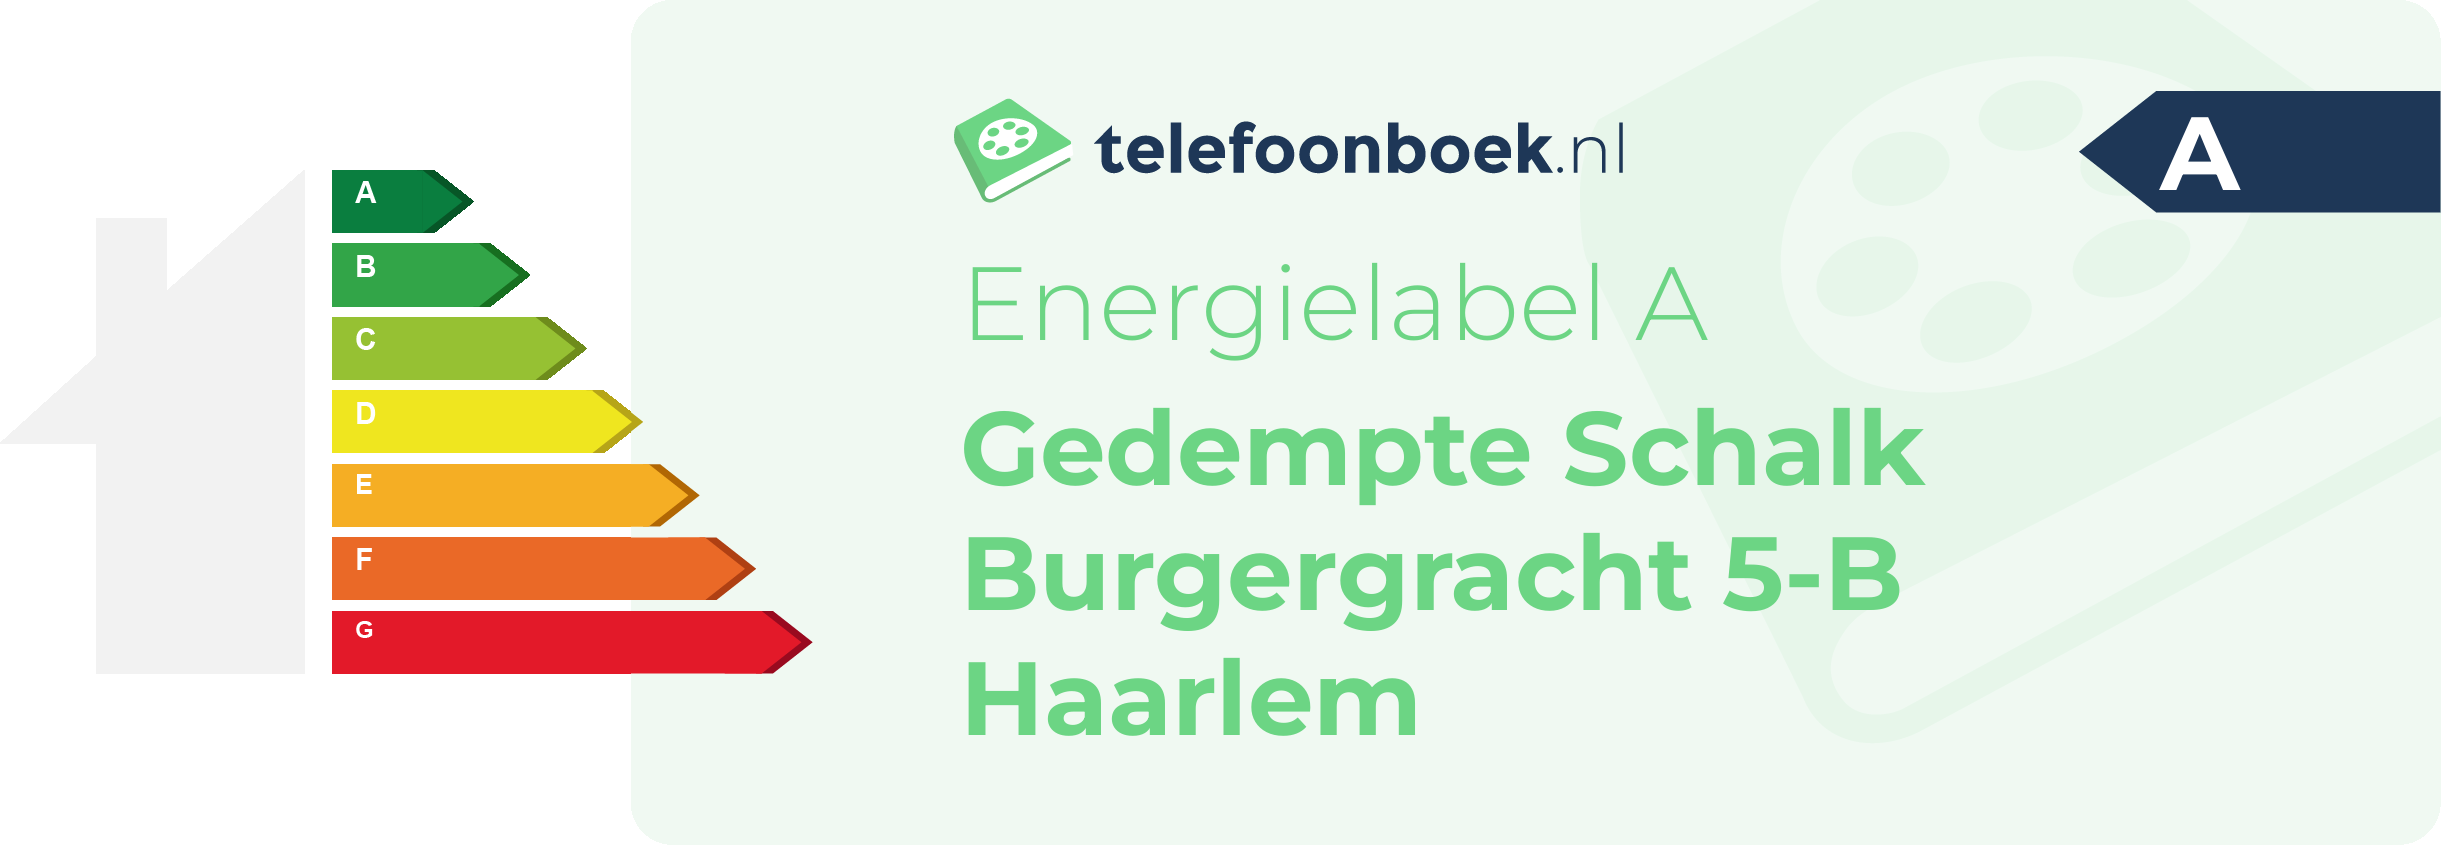 Energielabel Gedempte Schalk Burgergracht 5-B Haarlem